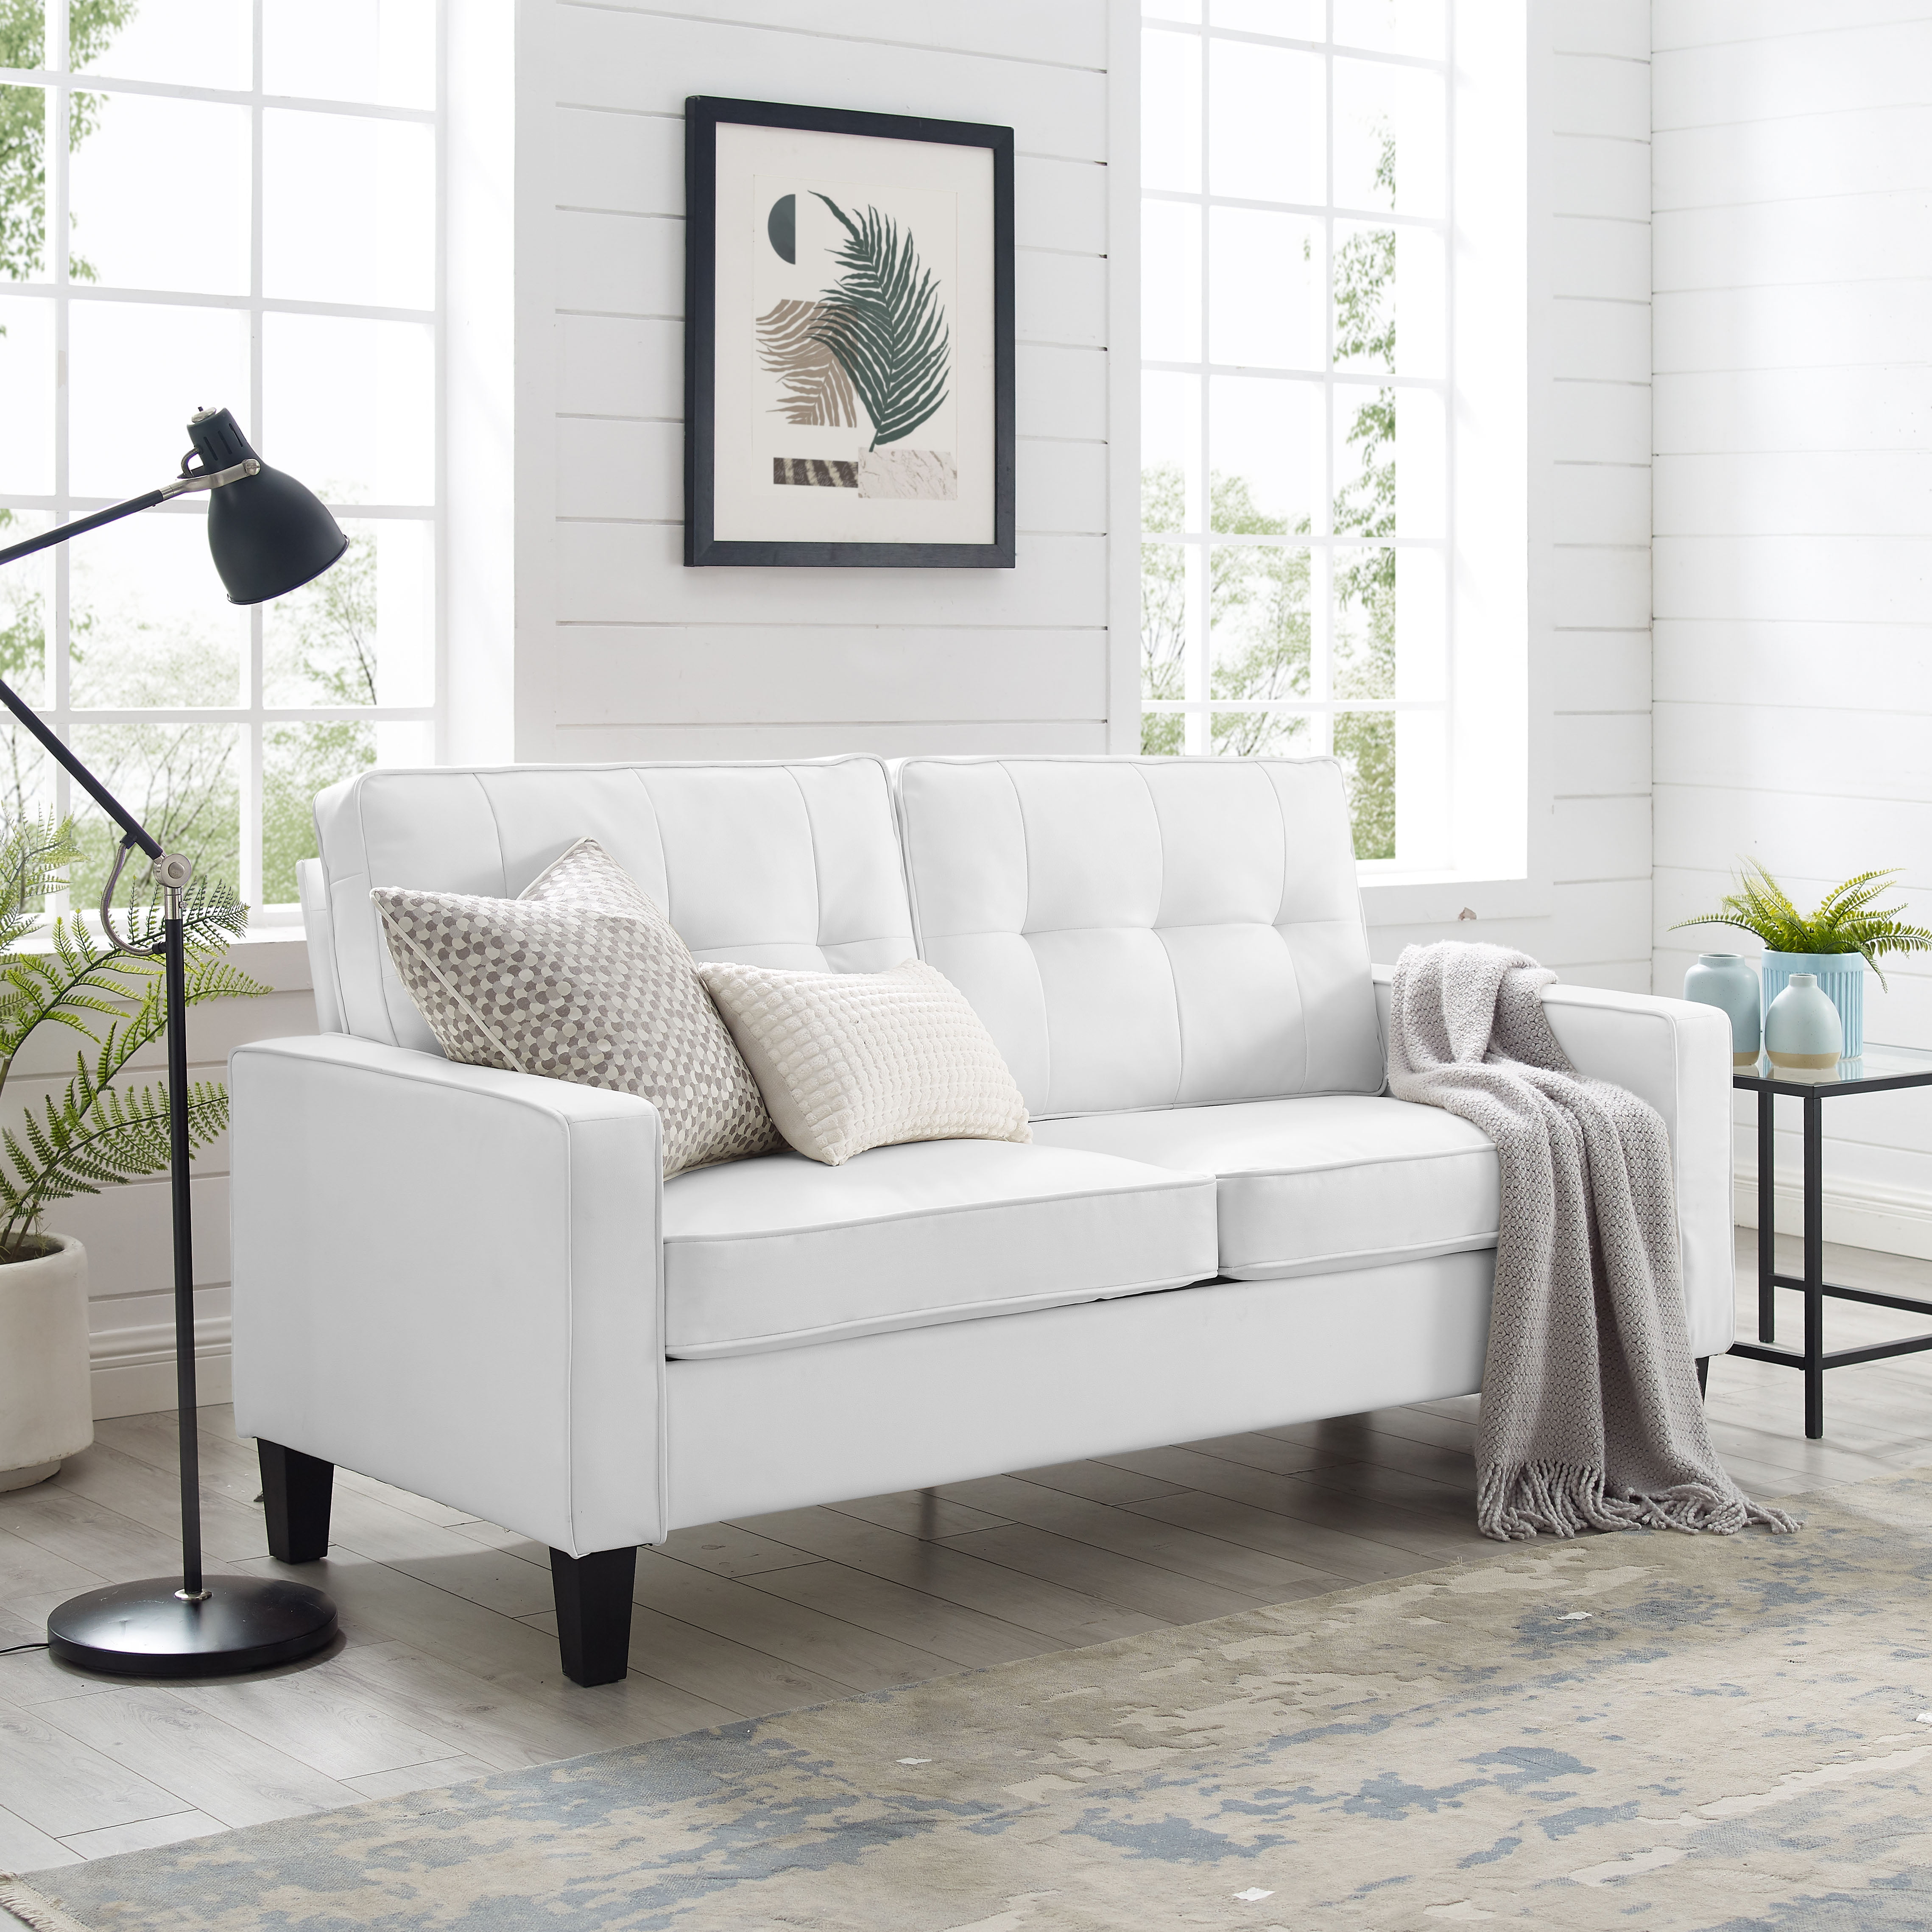 New Walmart Online Furniture for Simple Design